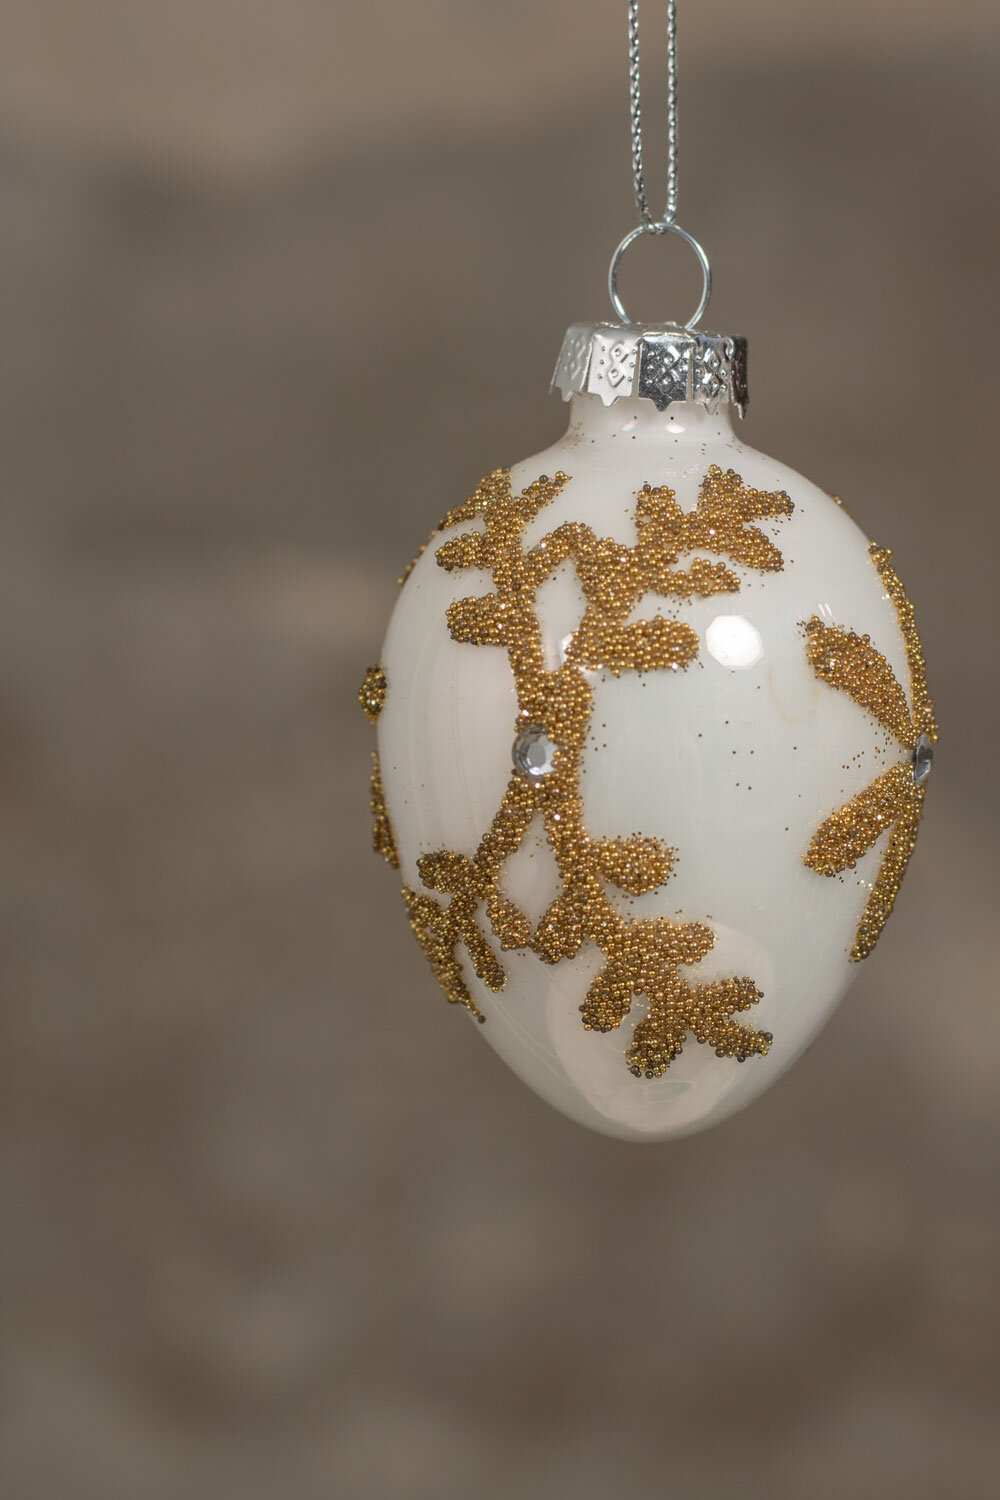 Small Christmas balls - 2-pack - Gold/White